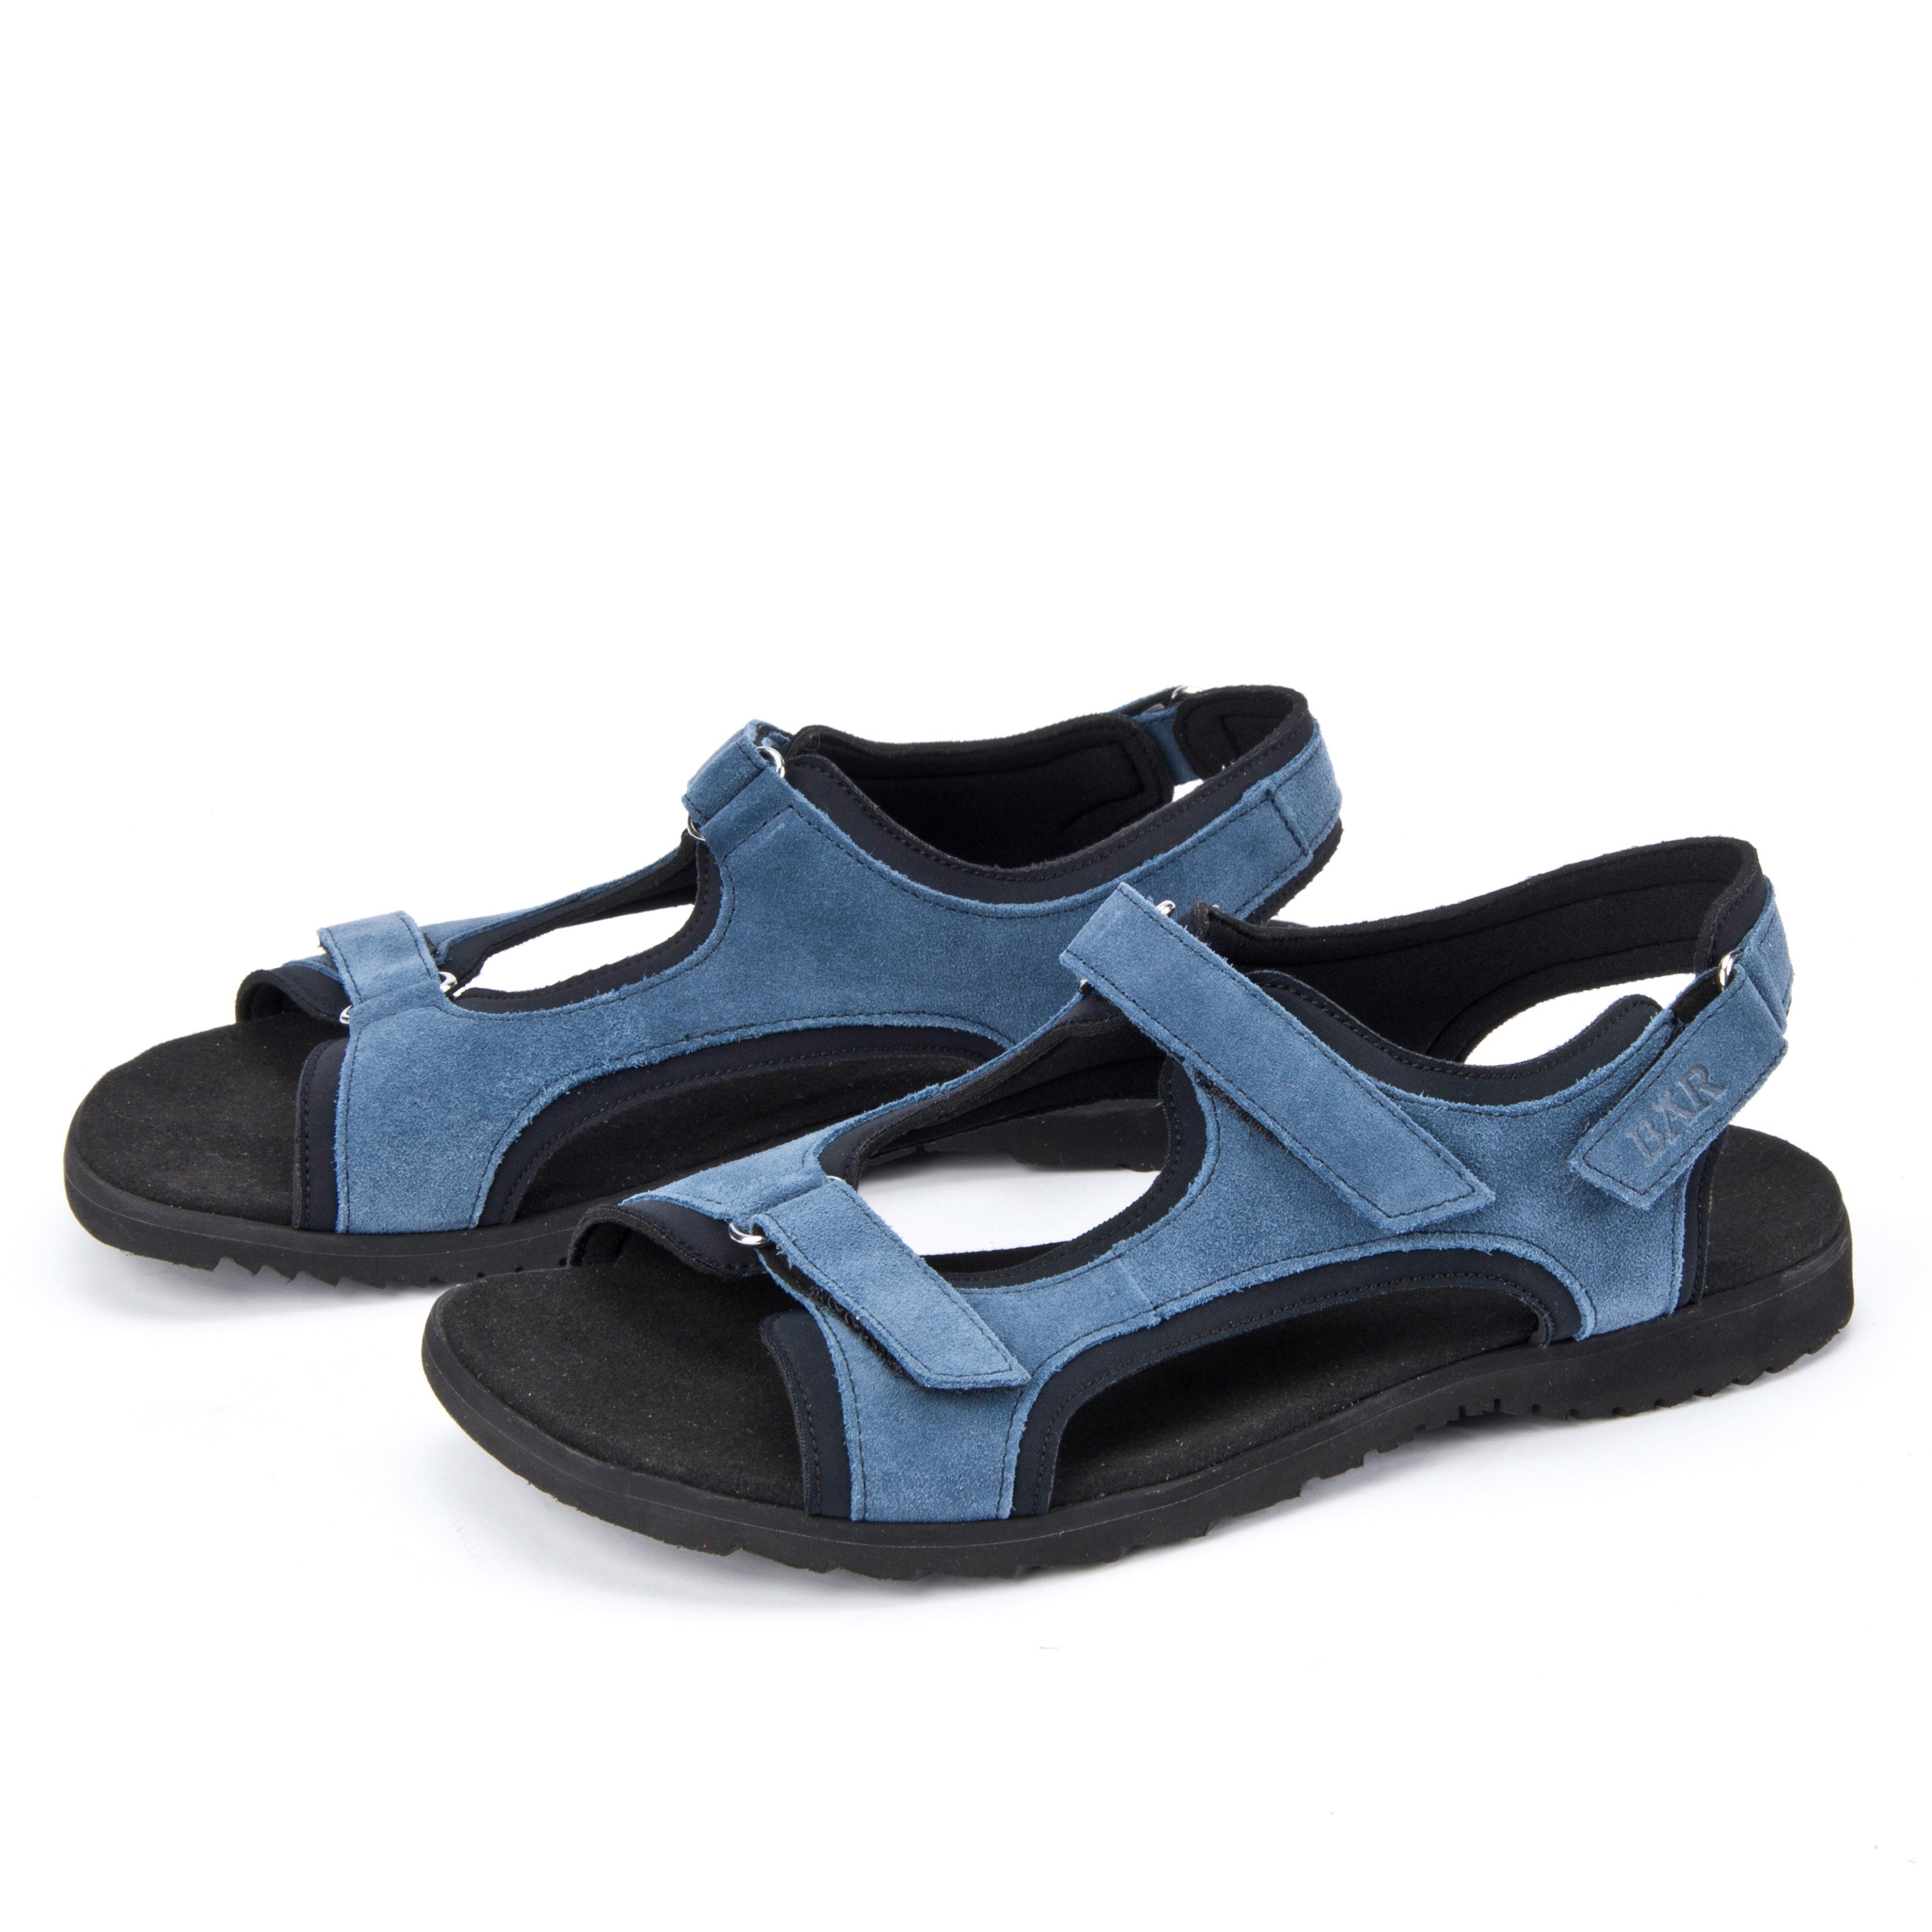 BÄR - Damenschuh Sandale der in Farbe Blau Modell Manila